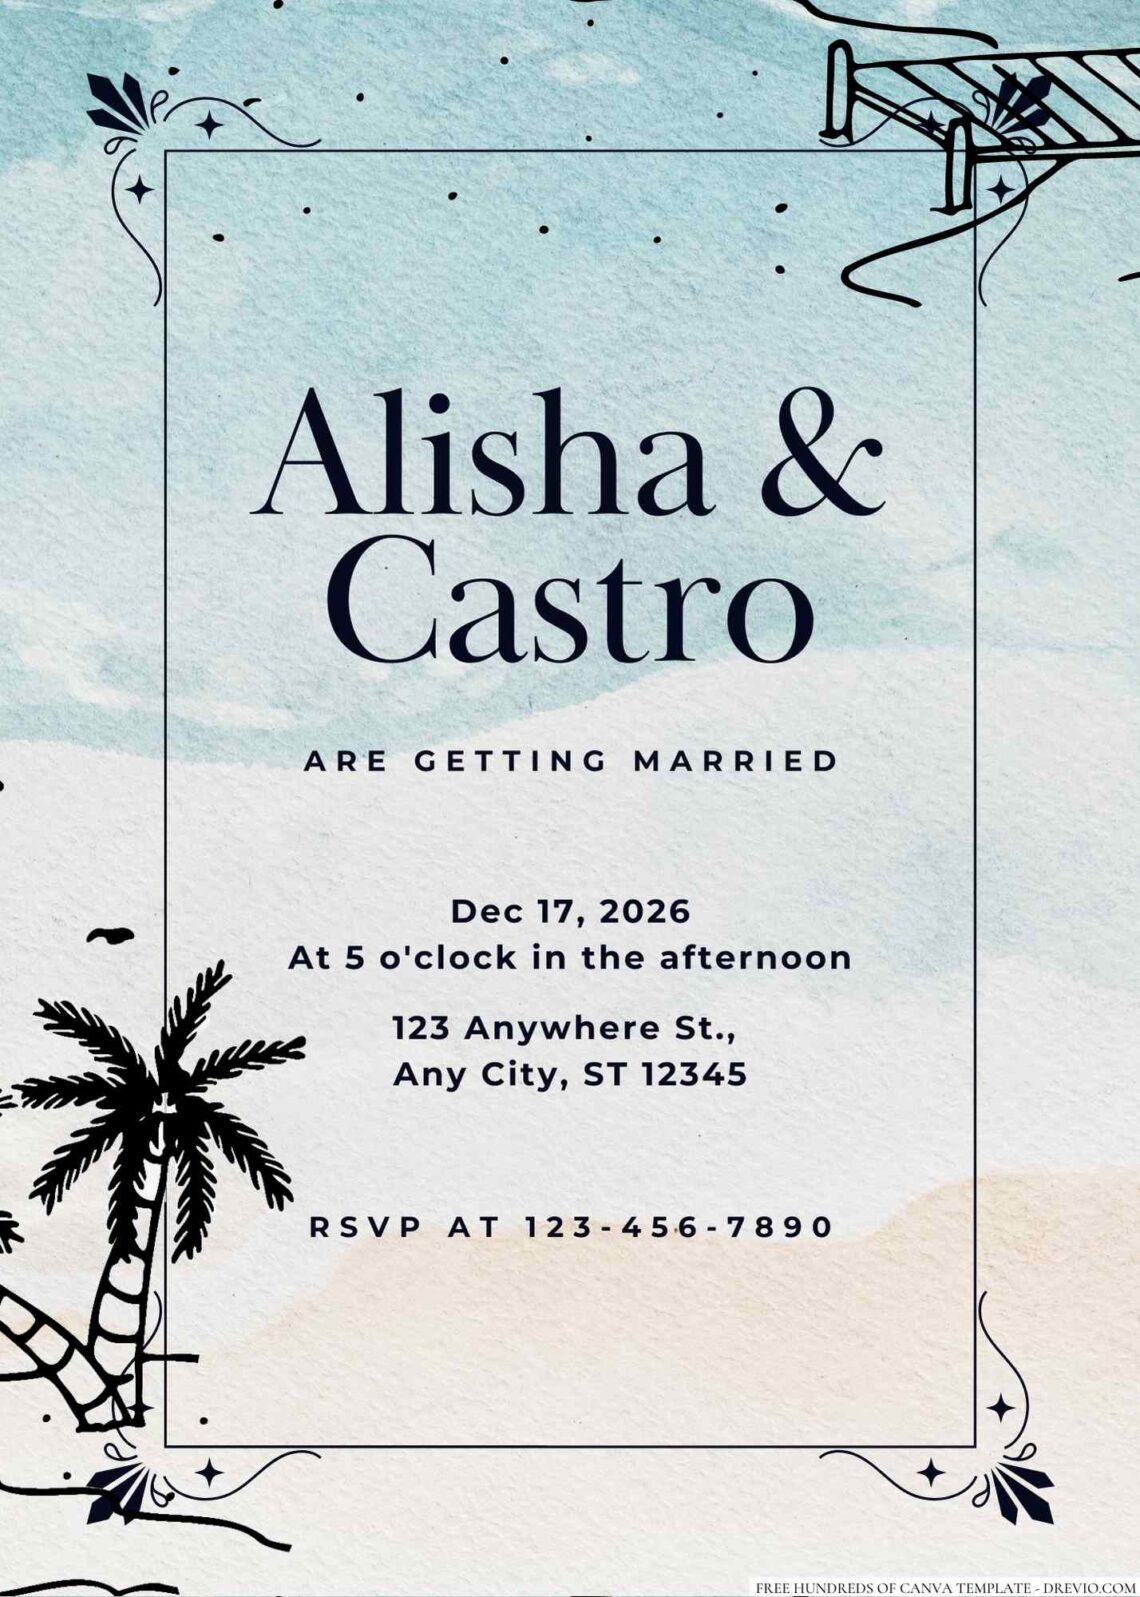 Free Editable Panoramic Beach View Sketch Wedding Invitation